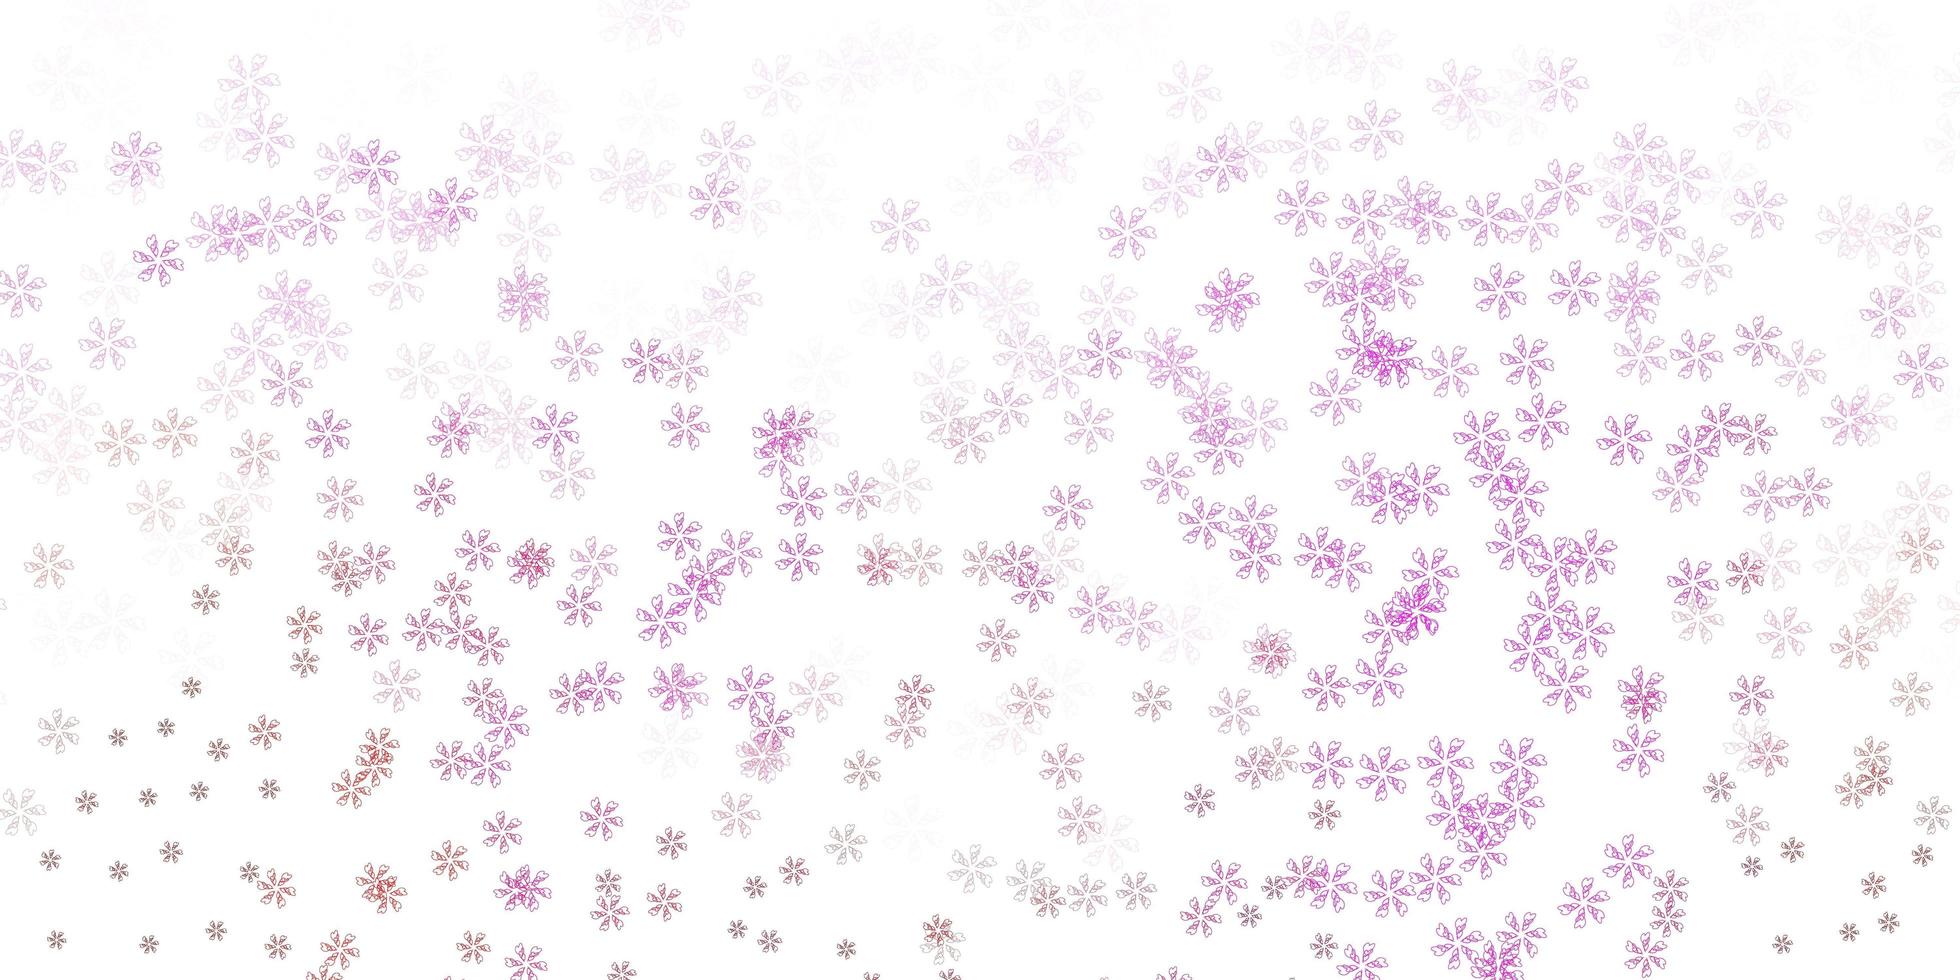 layout abstrato de vetor rosa claro com folhas.